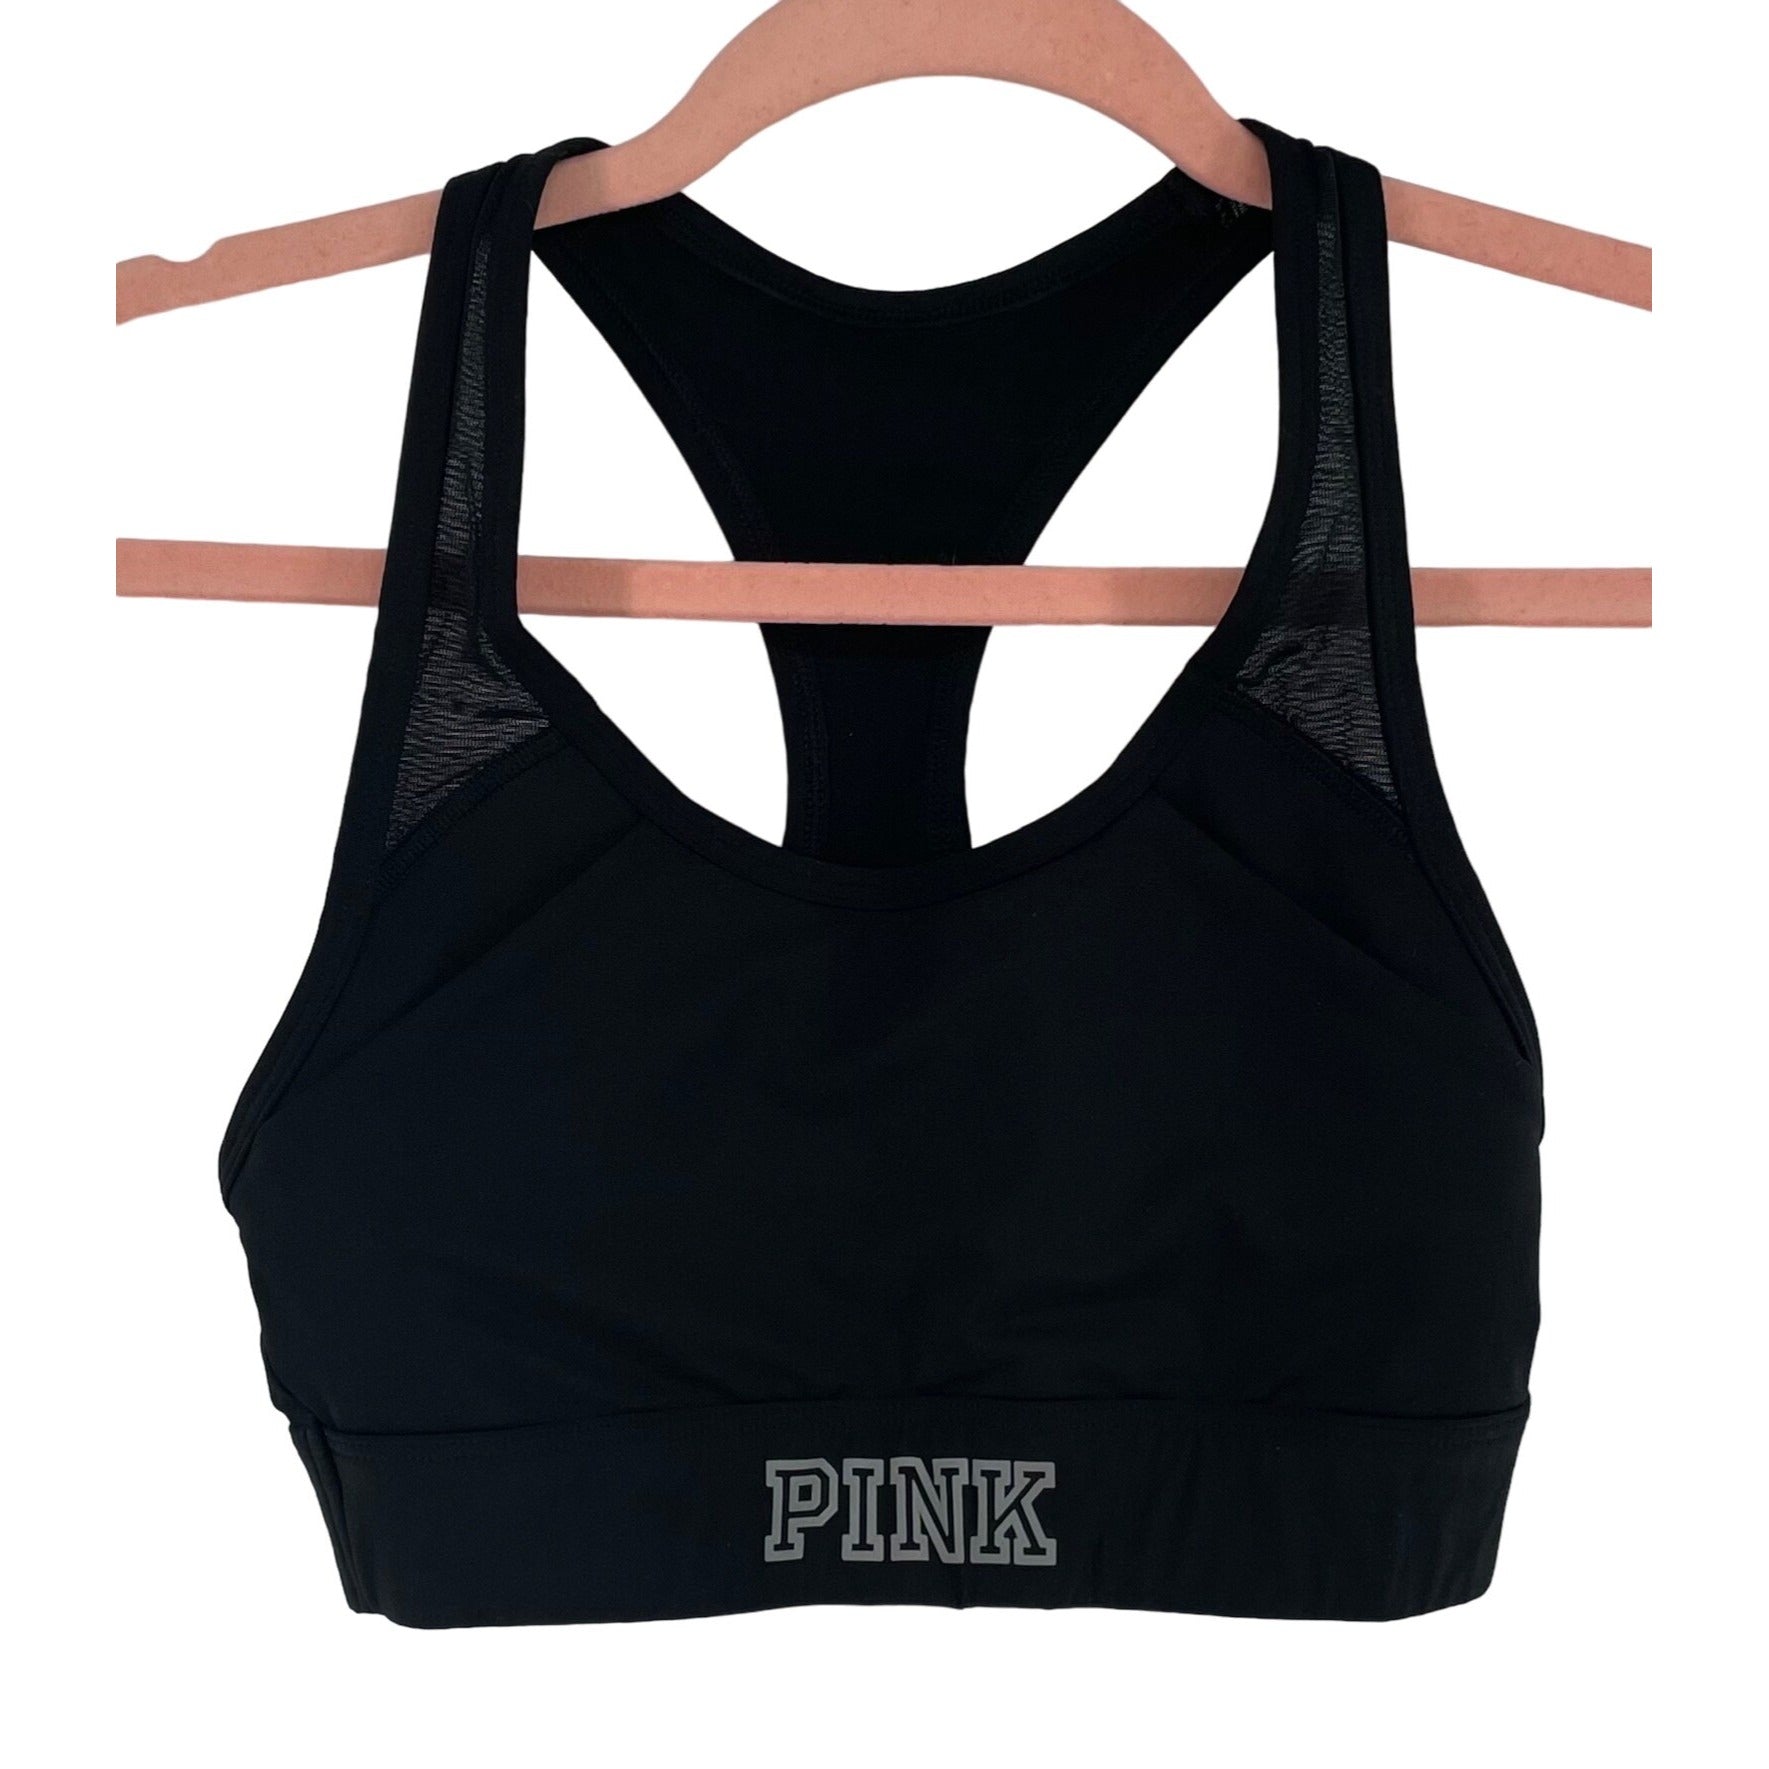 PINK Victoria's Secret Ultimate black sports bra size L RN# 54867 